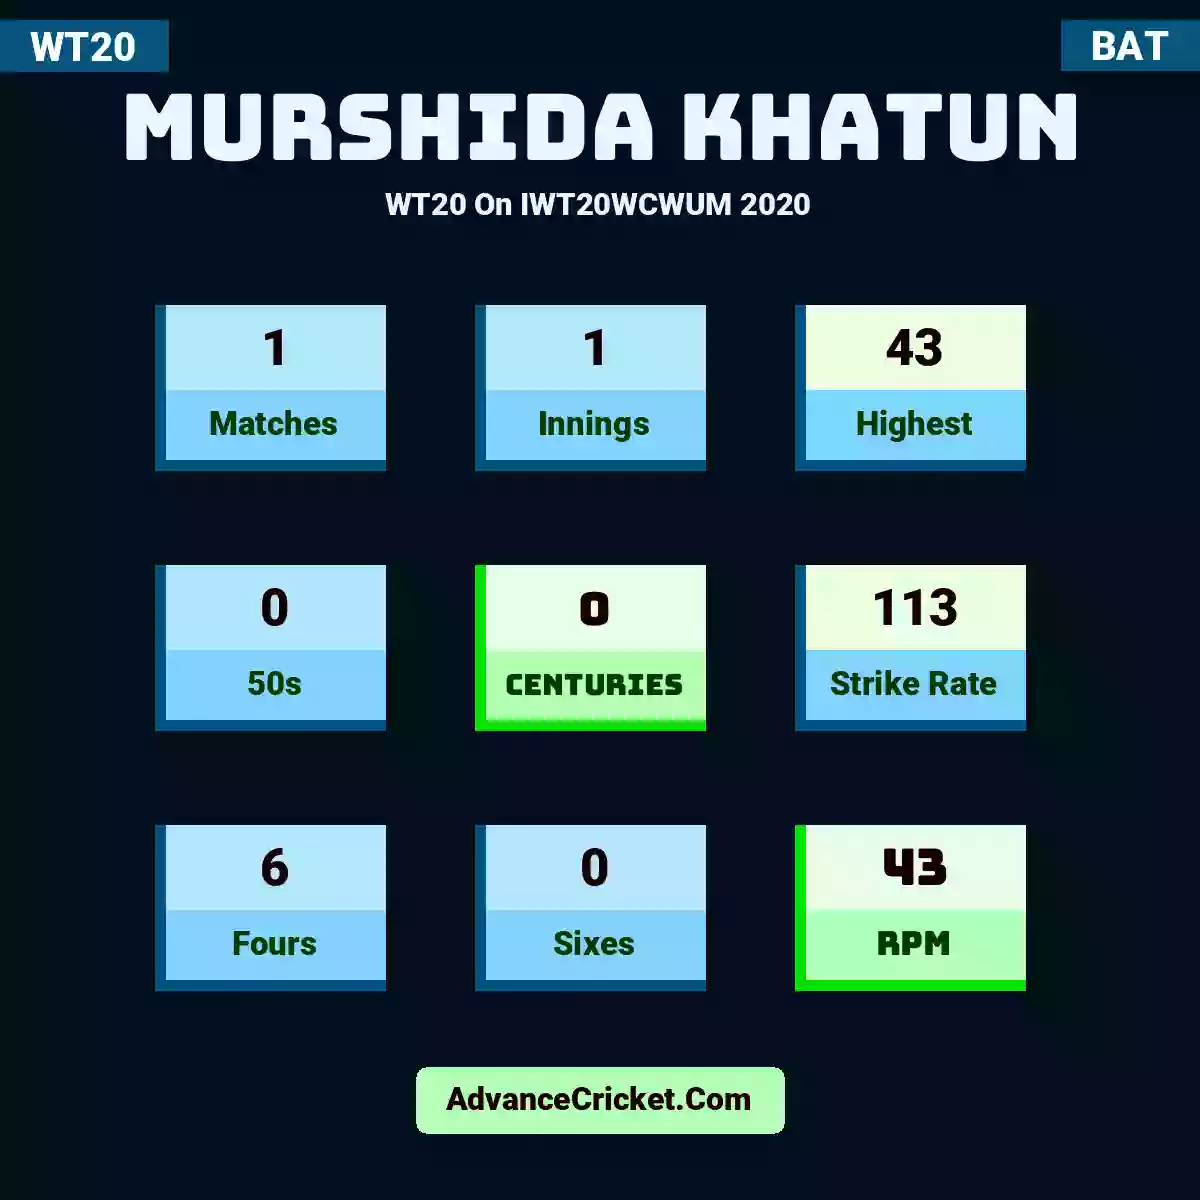 Murshida Khatun WT20  On IWT20WCWUM 2020, Murshida Khatun played 1 matches, scored 43 runs as highest, 0 half-centuries, and 0 centuries, with a strike rate of 113. M.Khatun hit 6 fours and 0 sixes, with an RPM of 43.